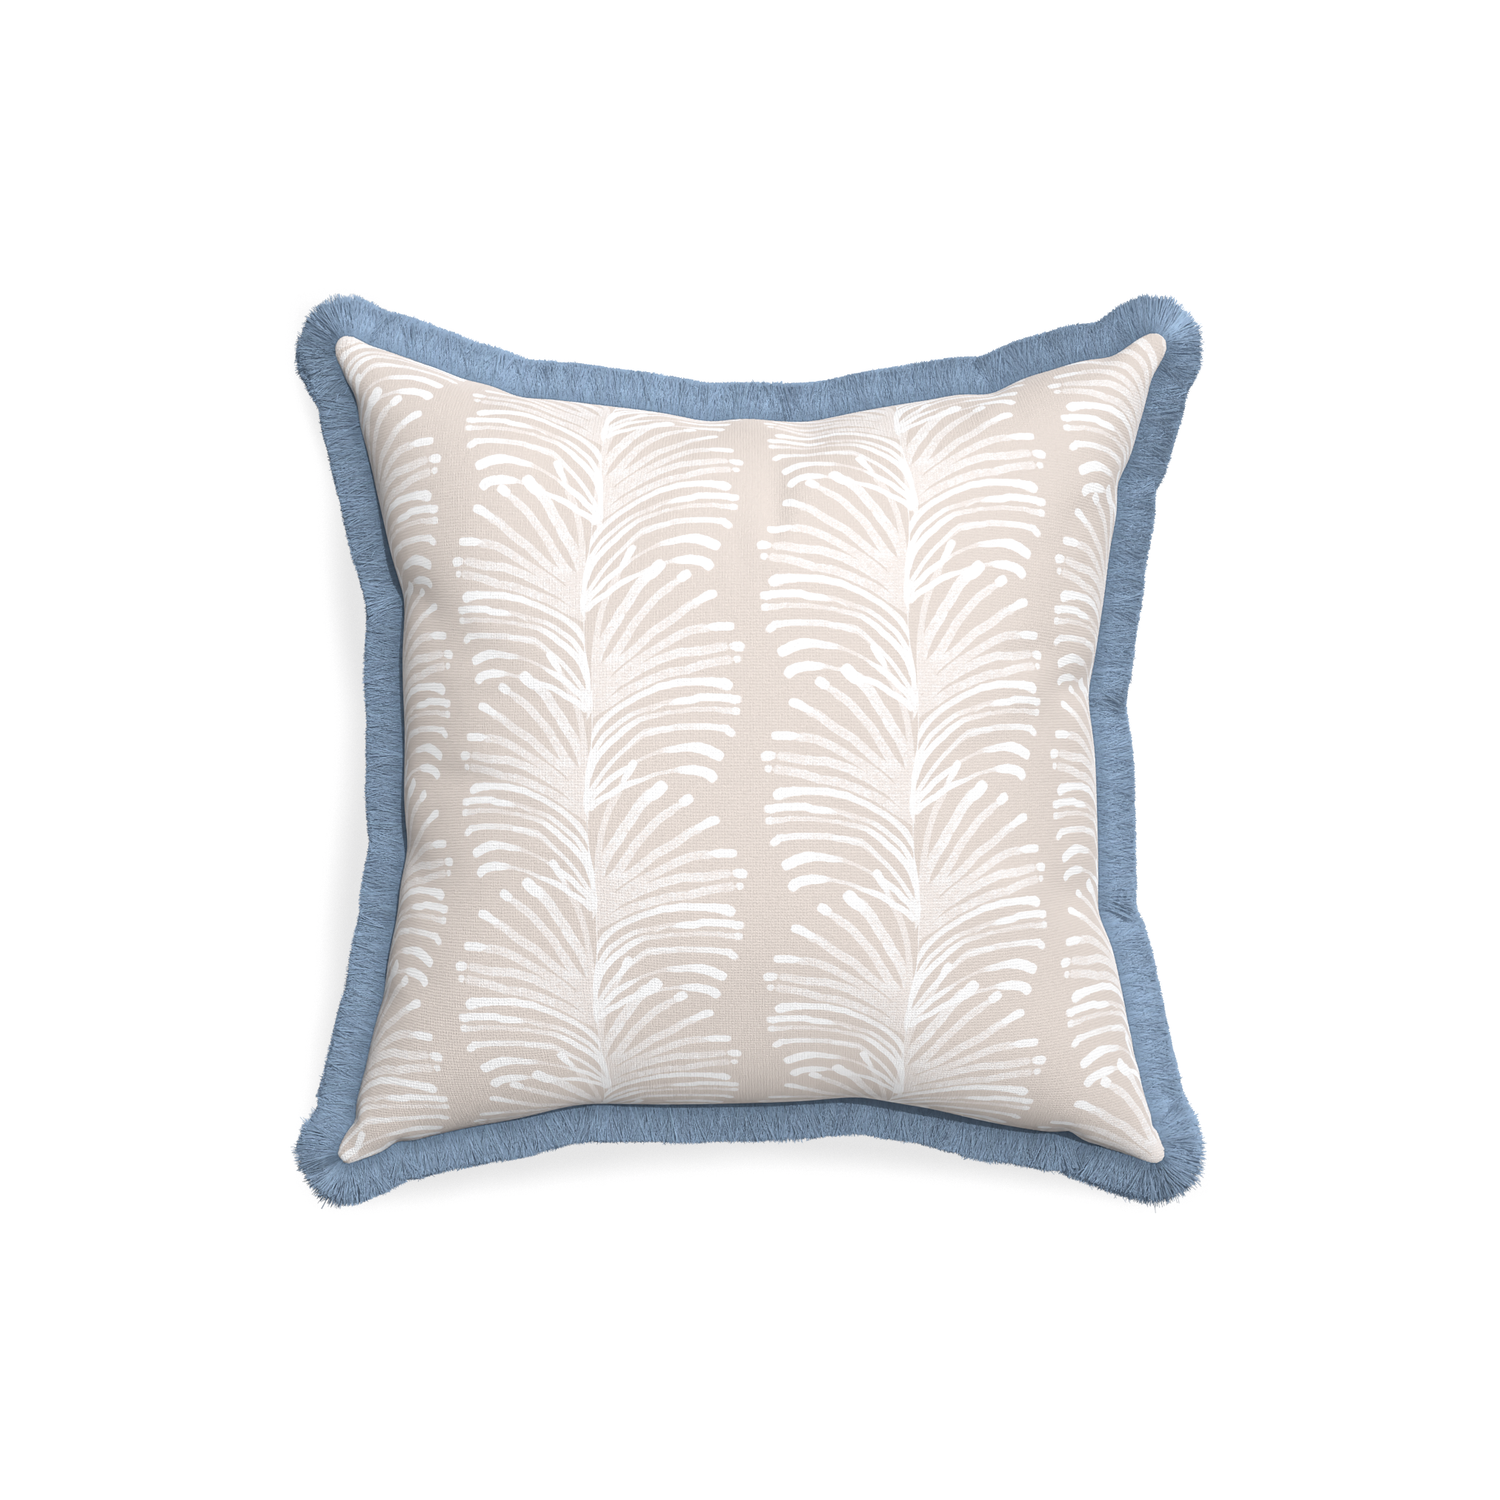 18-square emma sand custom pillow with sky fringe on white background